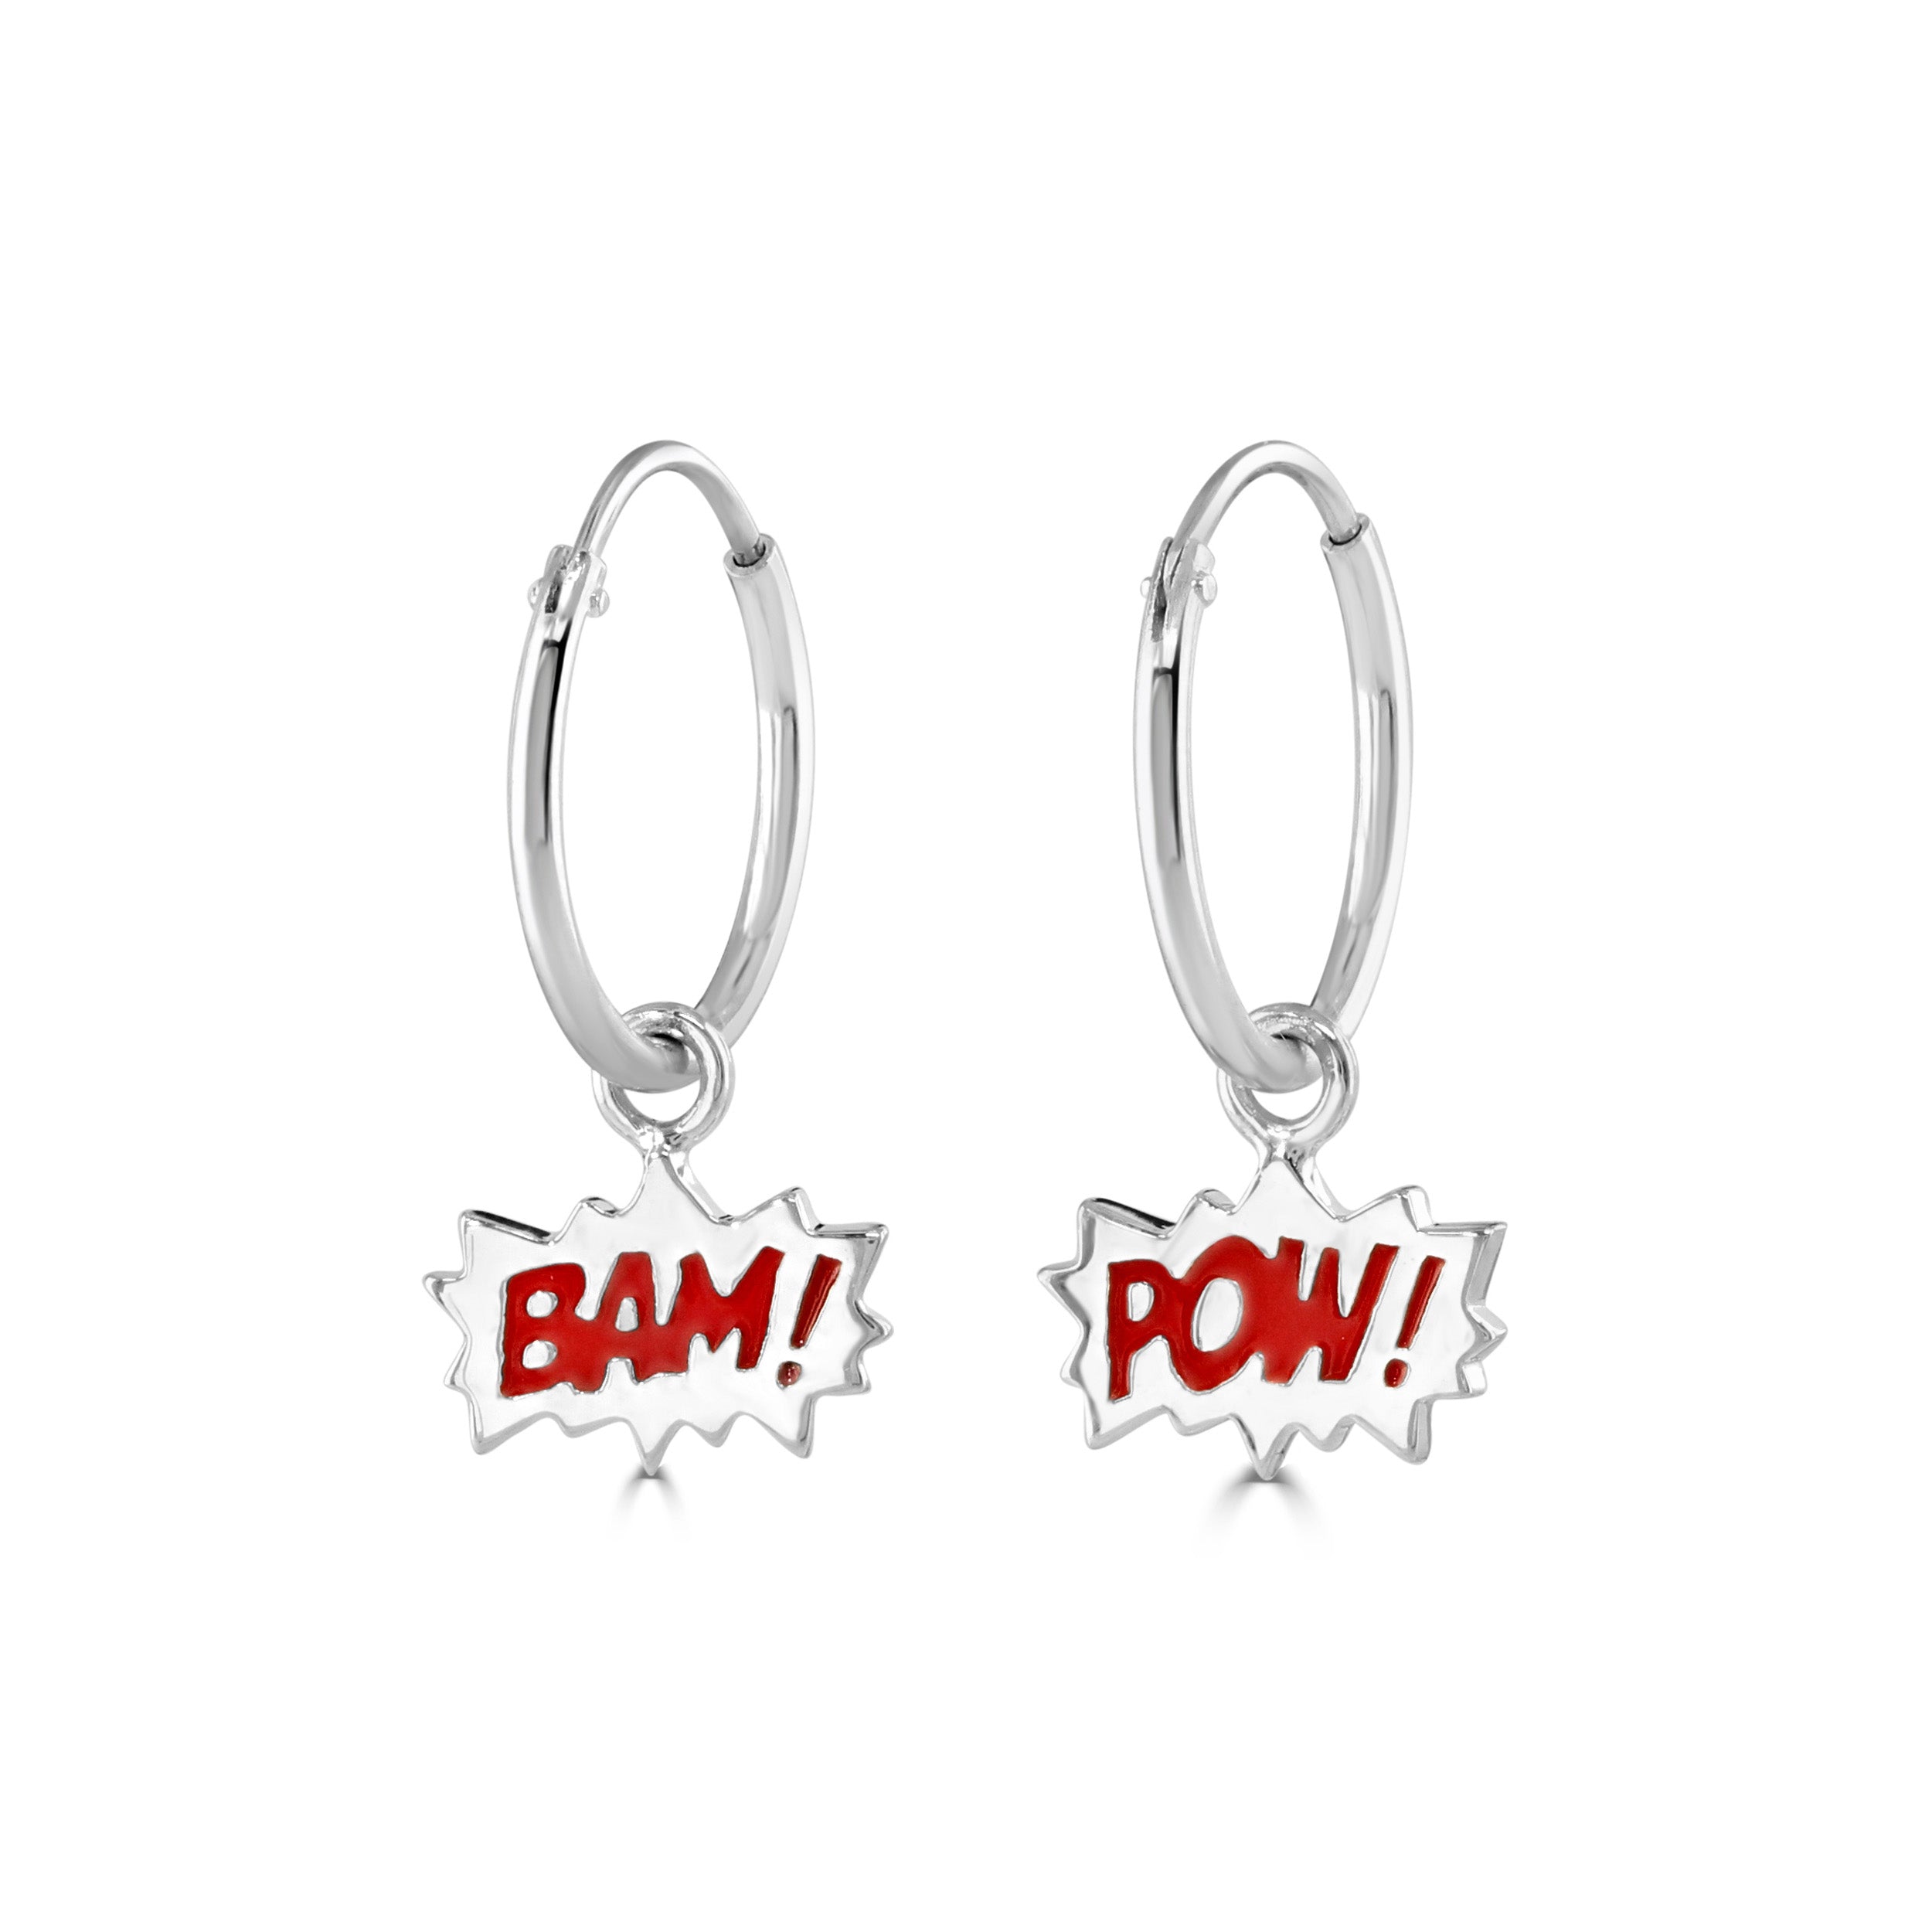 Silver Bam! & Pow! Hoop Earrings